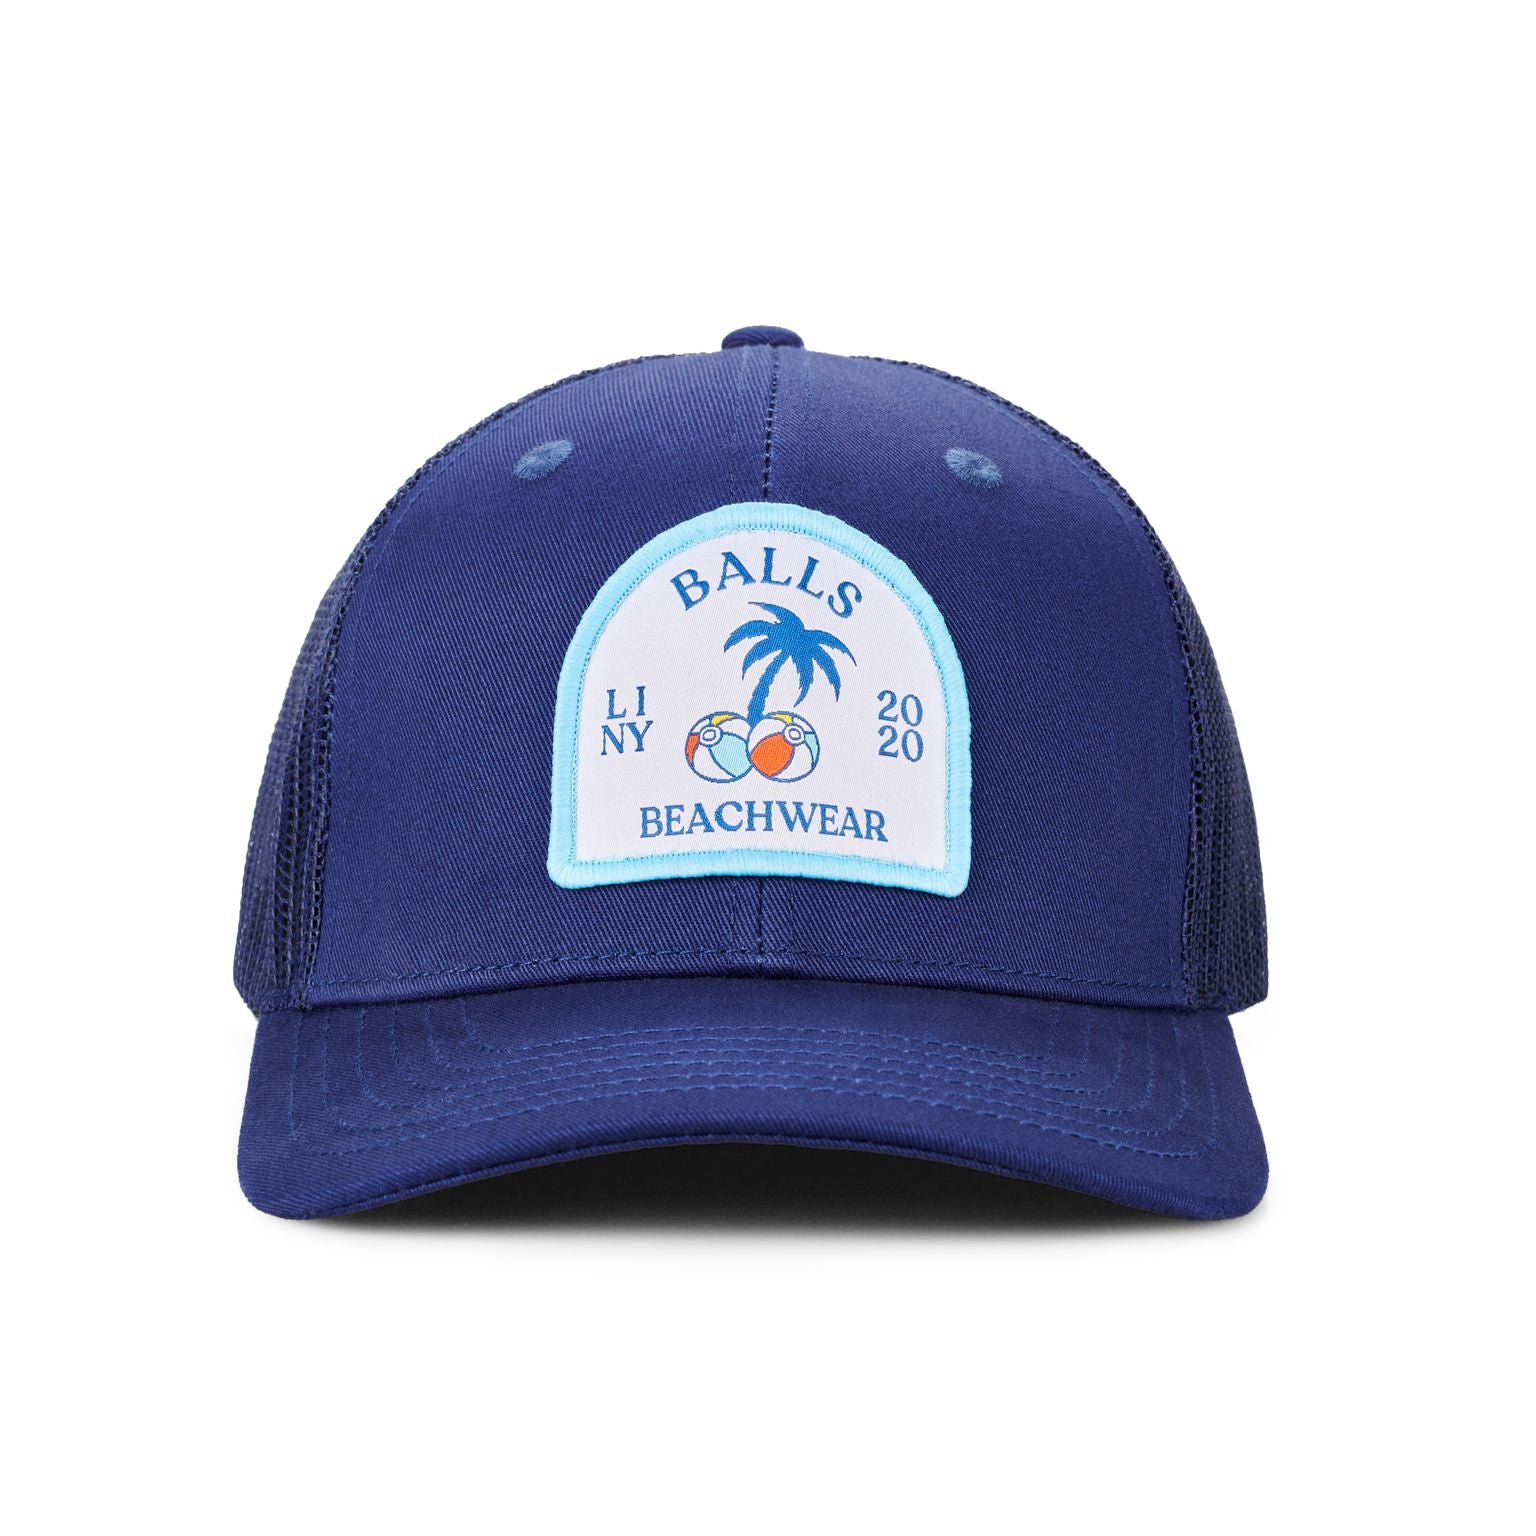 Balls Beachwear LI Patch Trucker Hat-Hats-Balls Beachwear-One Size-Navy-Barstool Sports